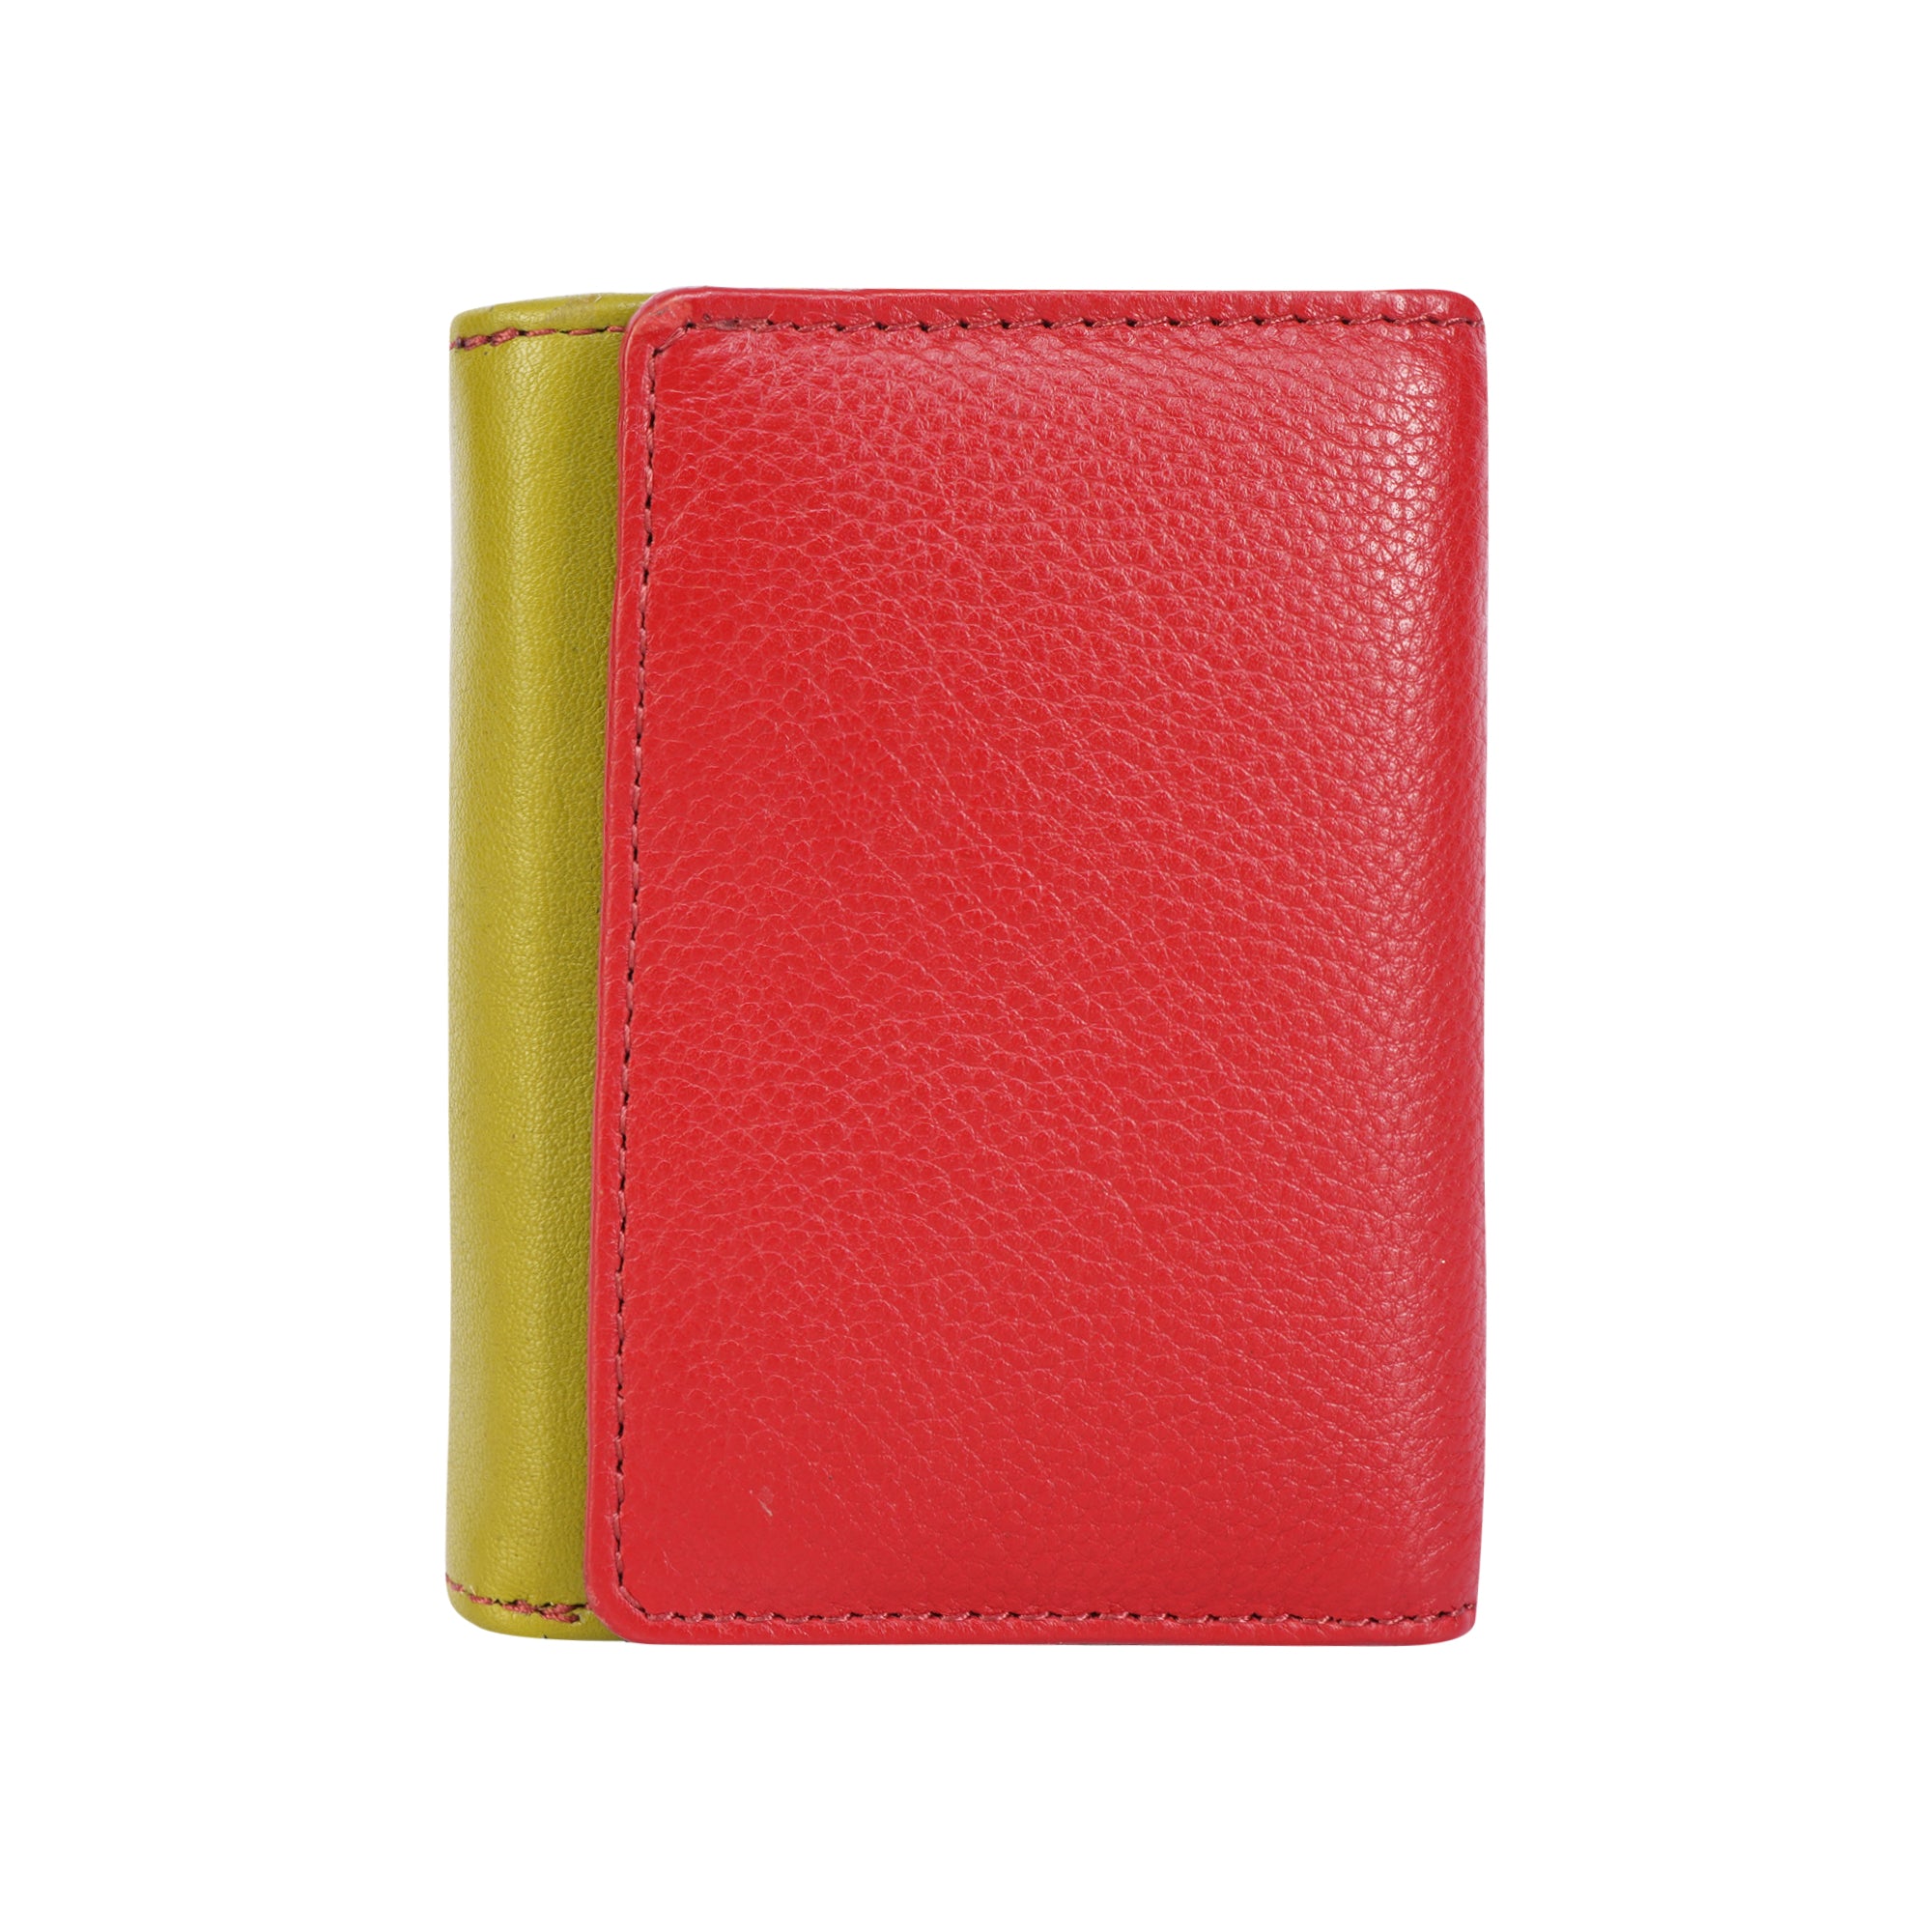 Credit Debit Leather Card Holder - GW8002 - Leather Greenwood Bag | The Greenwood Leather Online Shop Australia